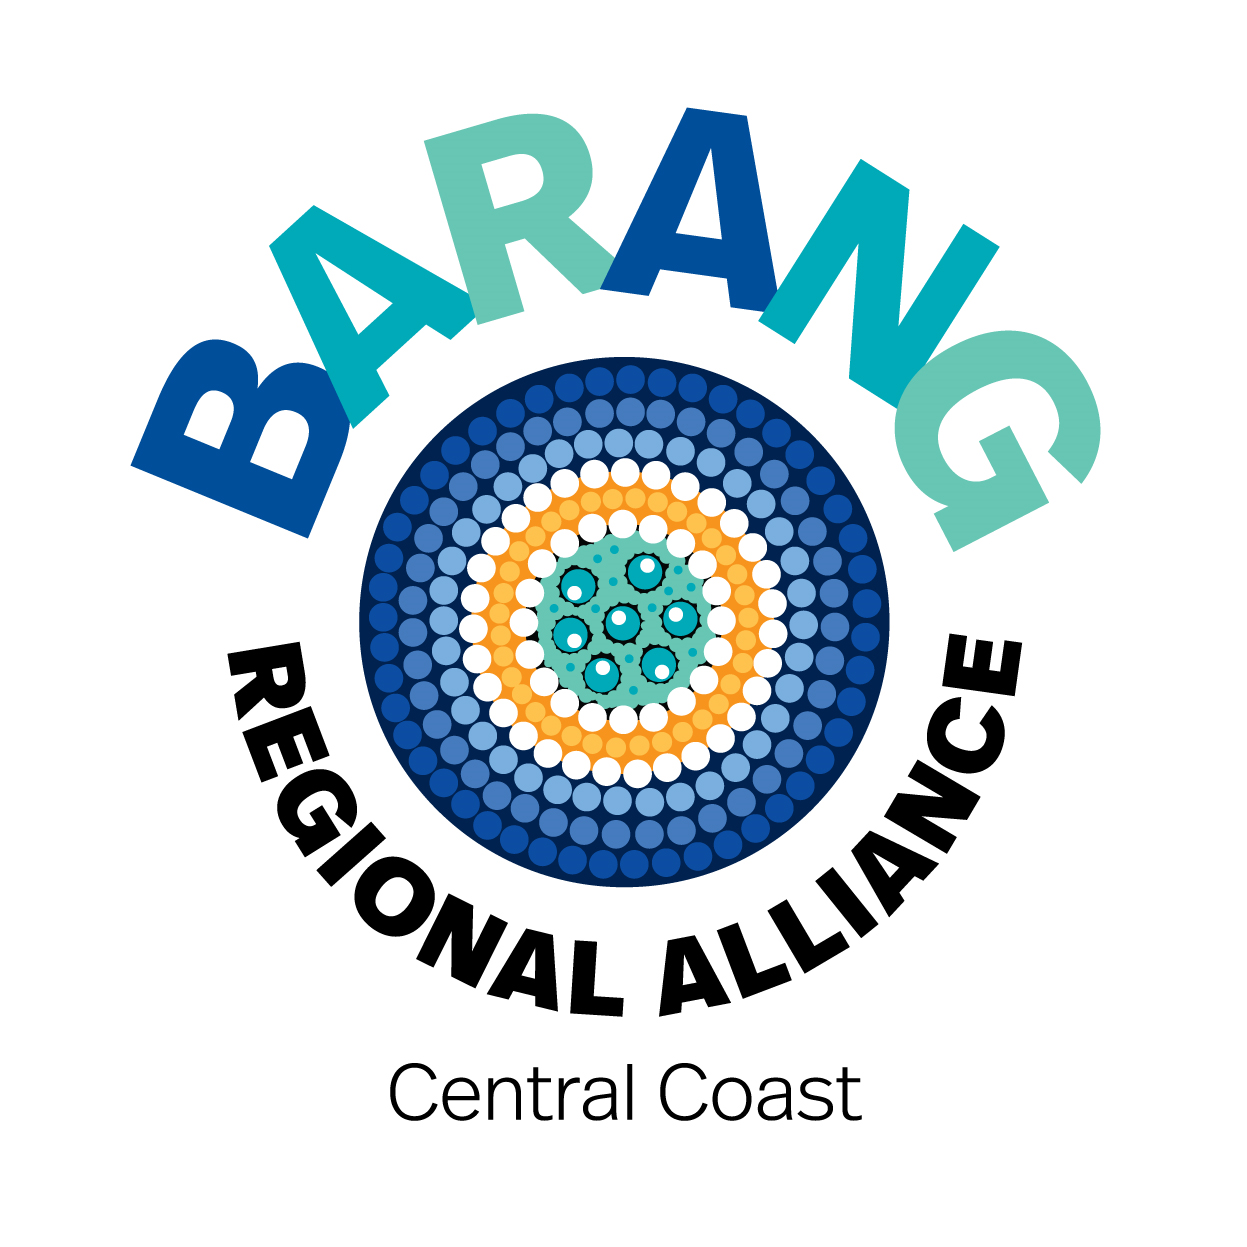 Barang Regional Alliance logo